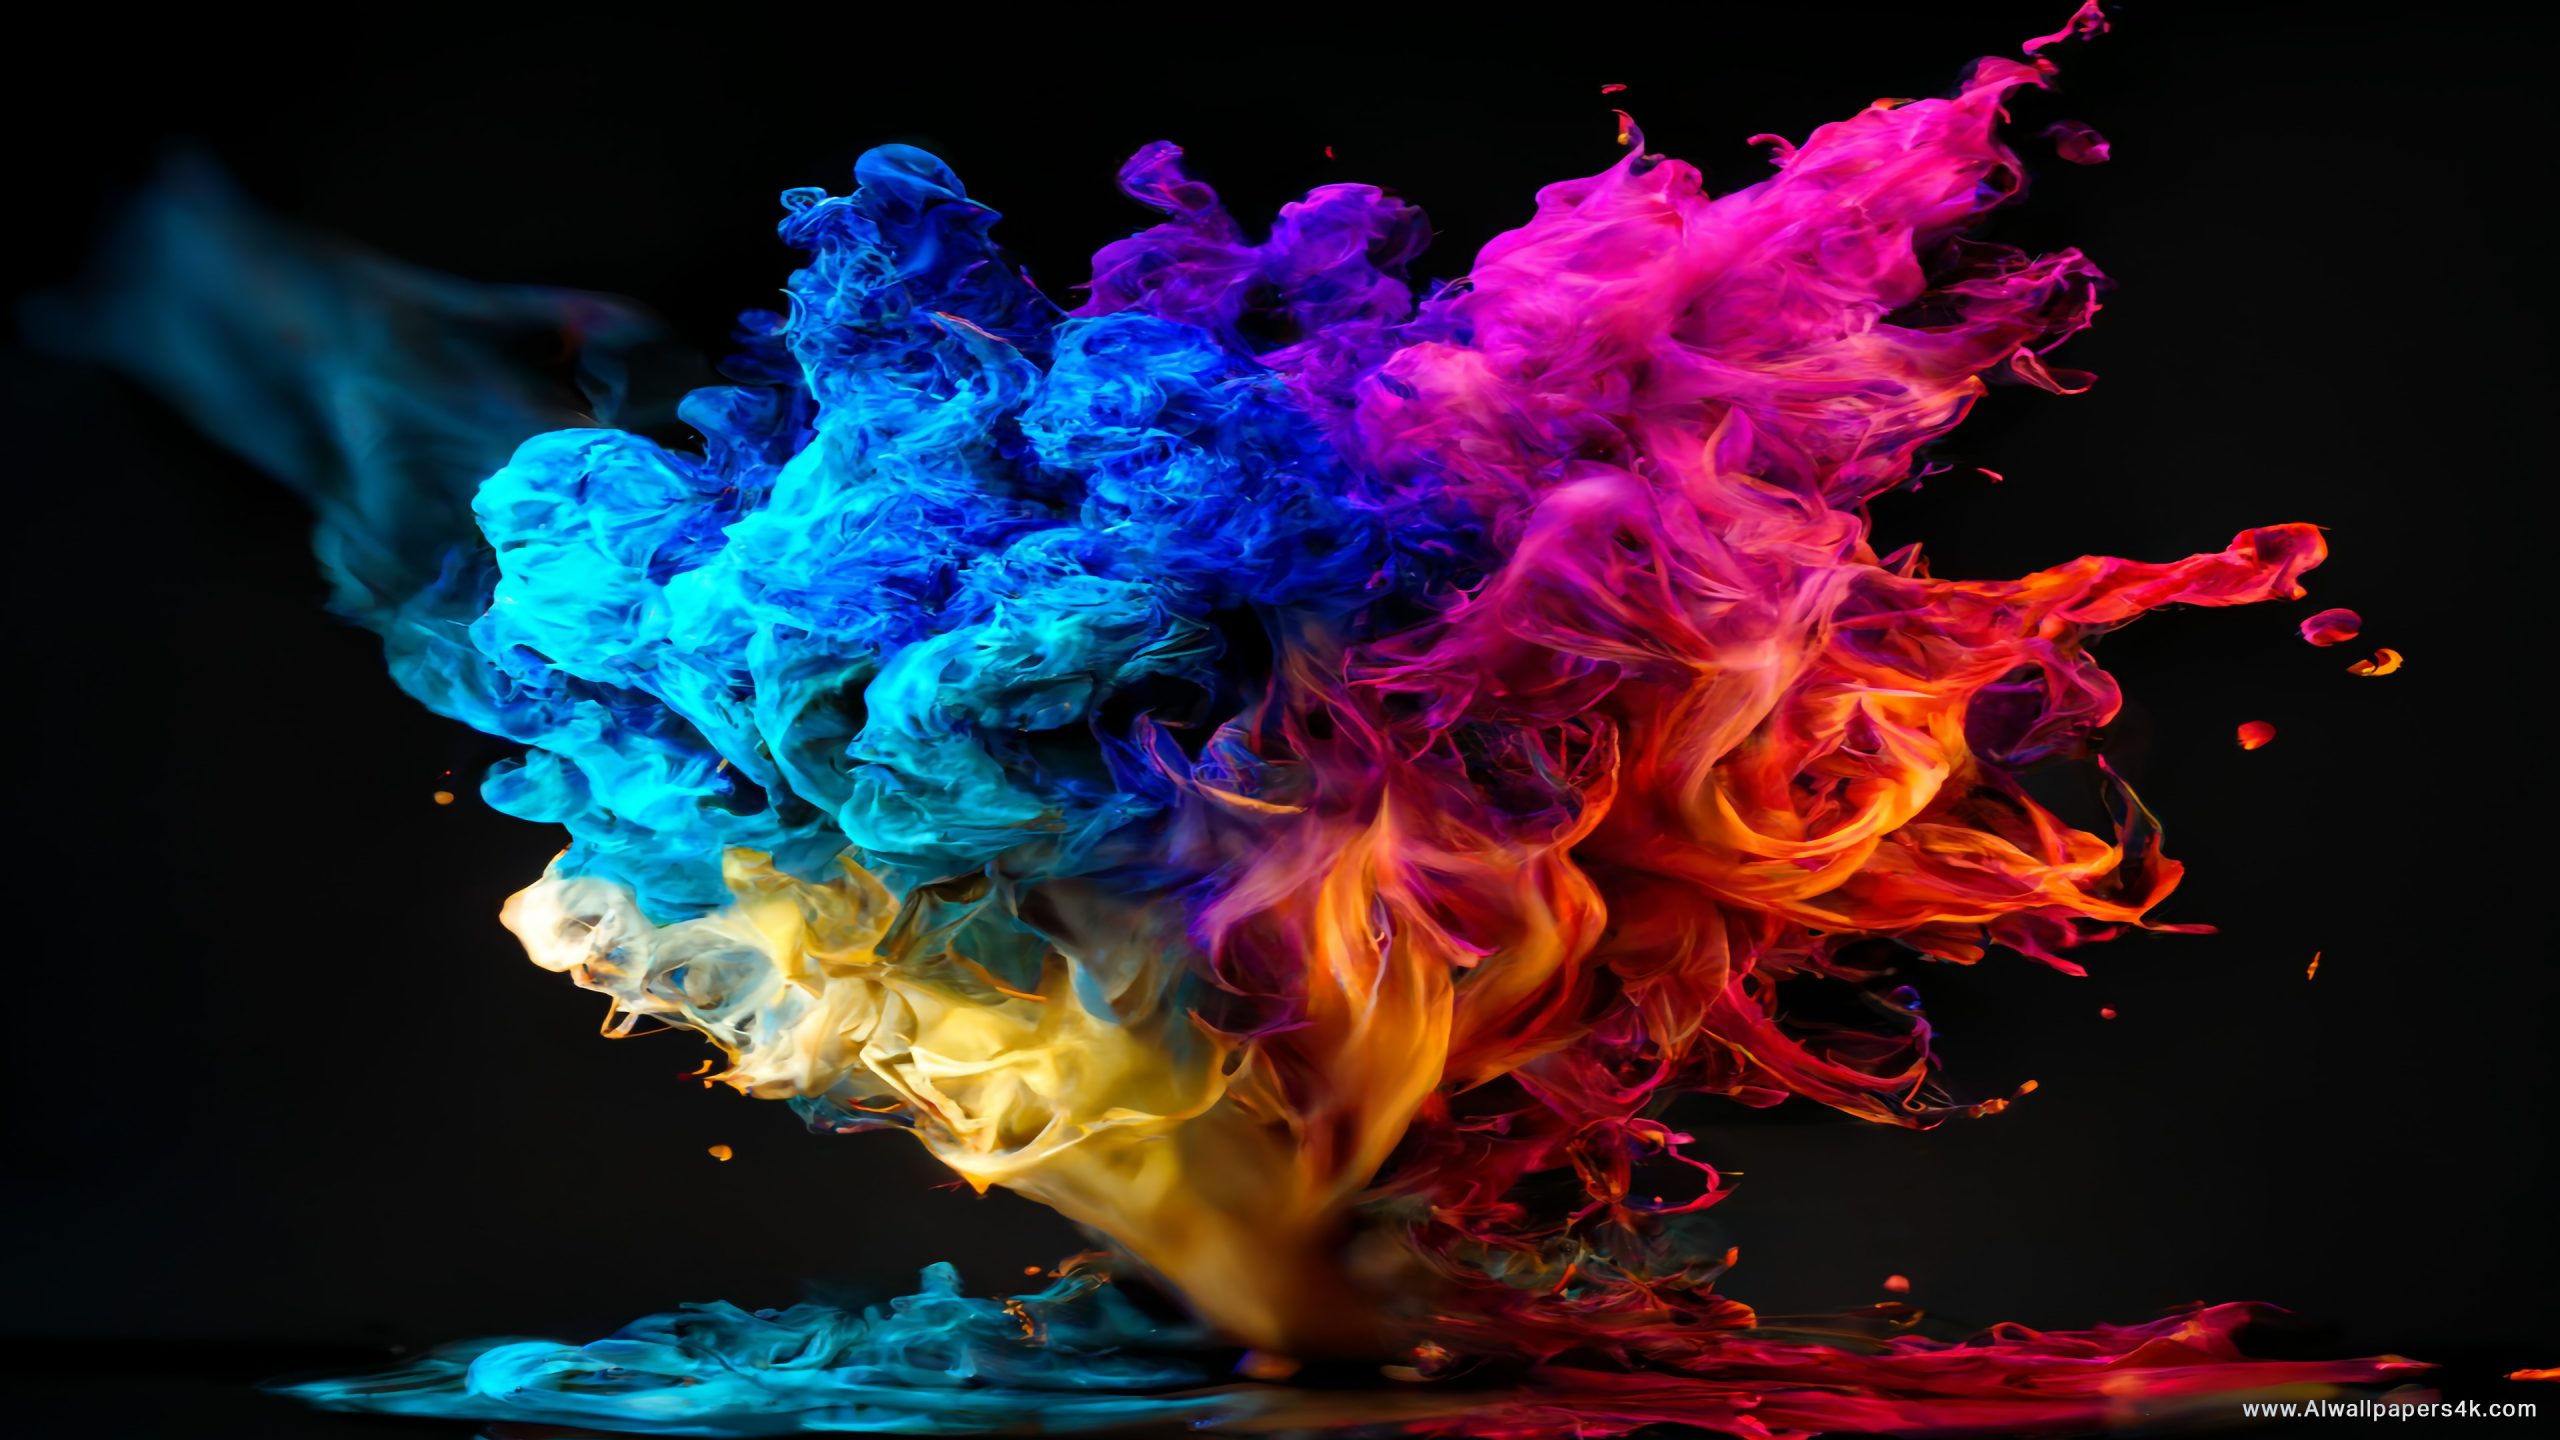 Rainbow colors explosive flame effect